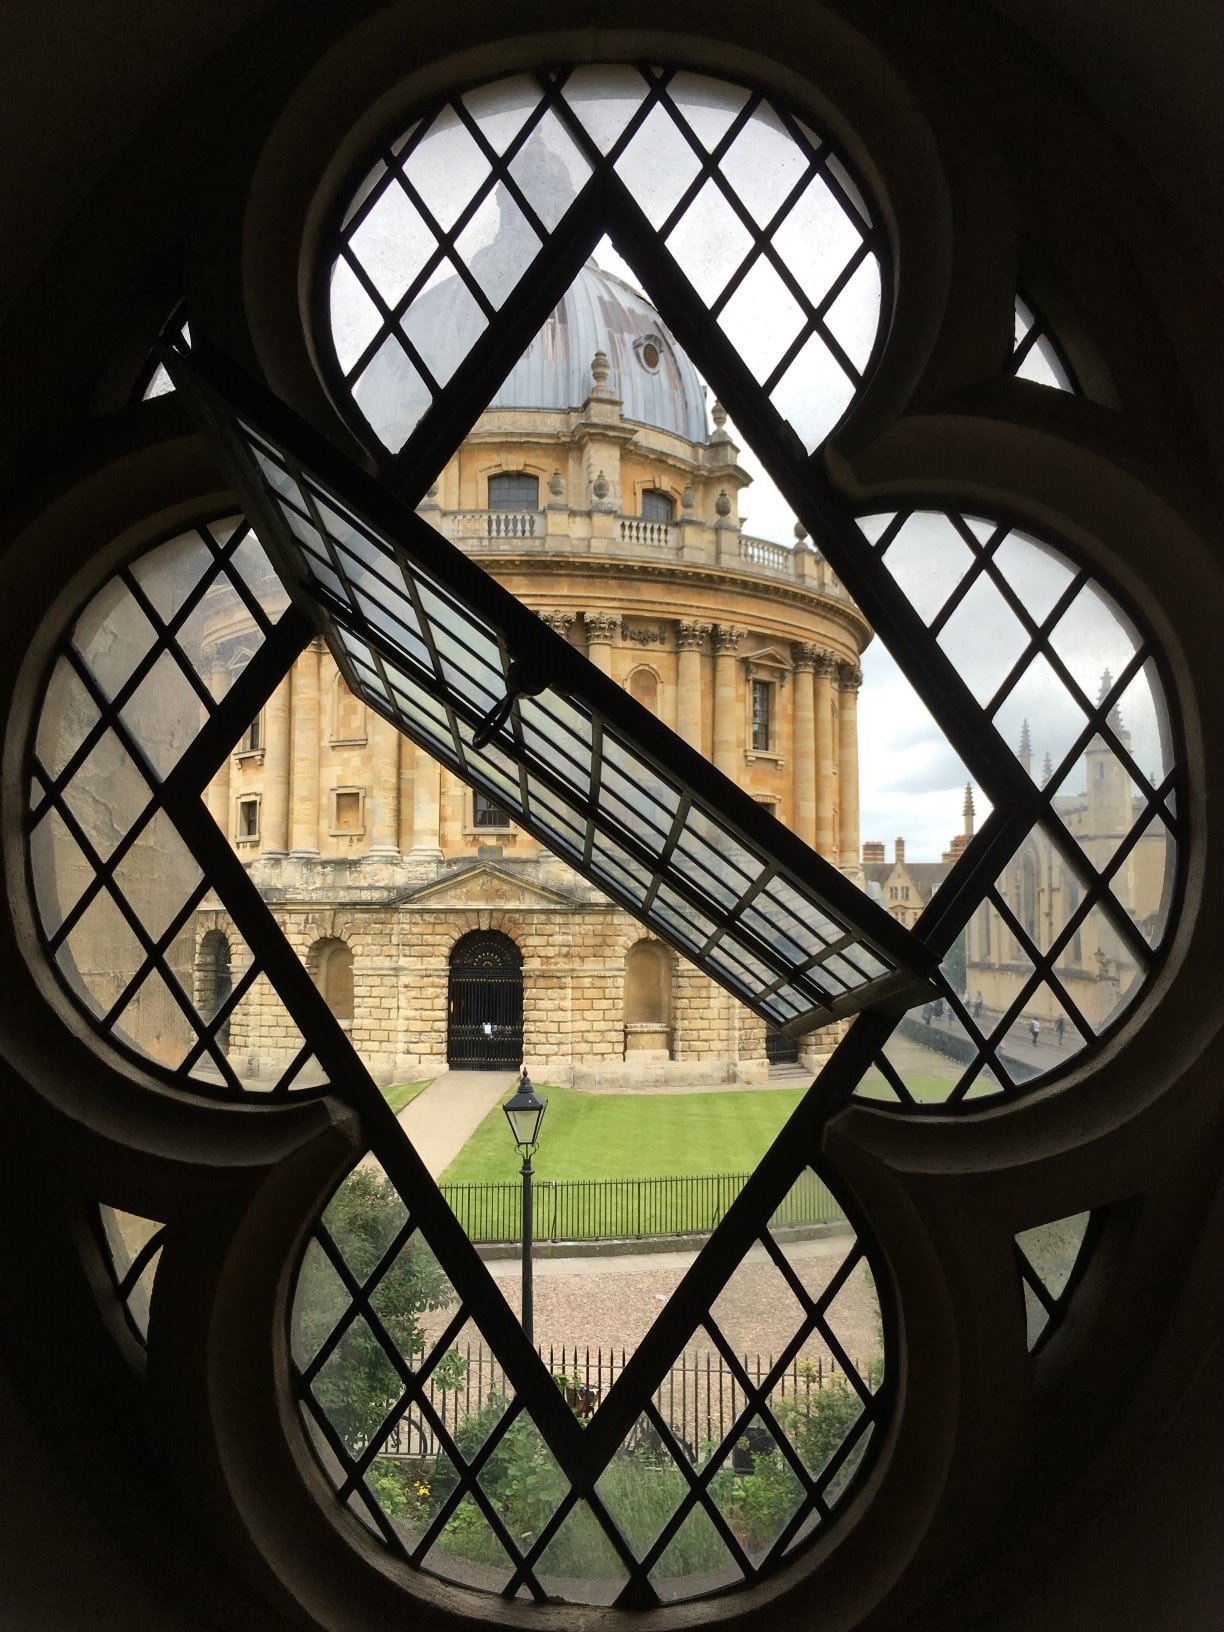 Radcliffe Camera through a window